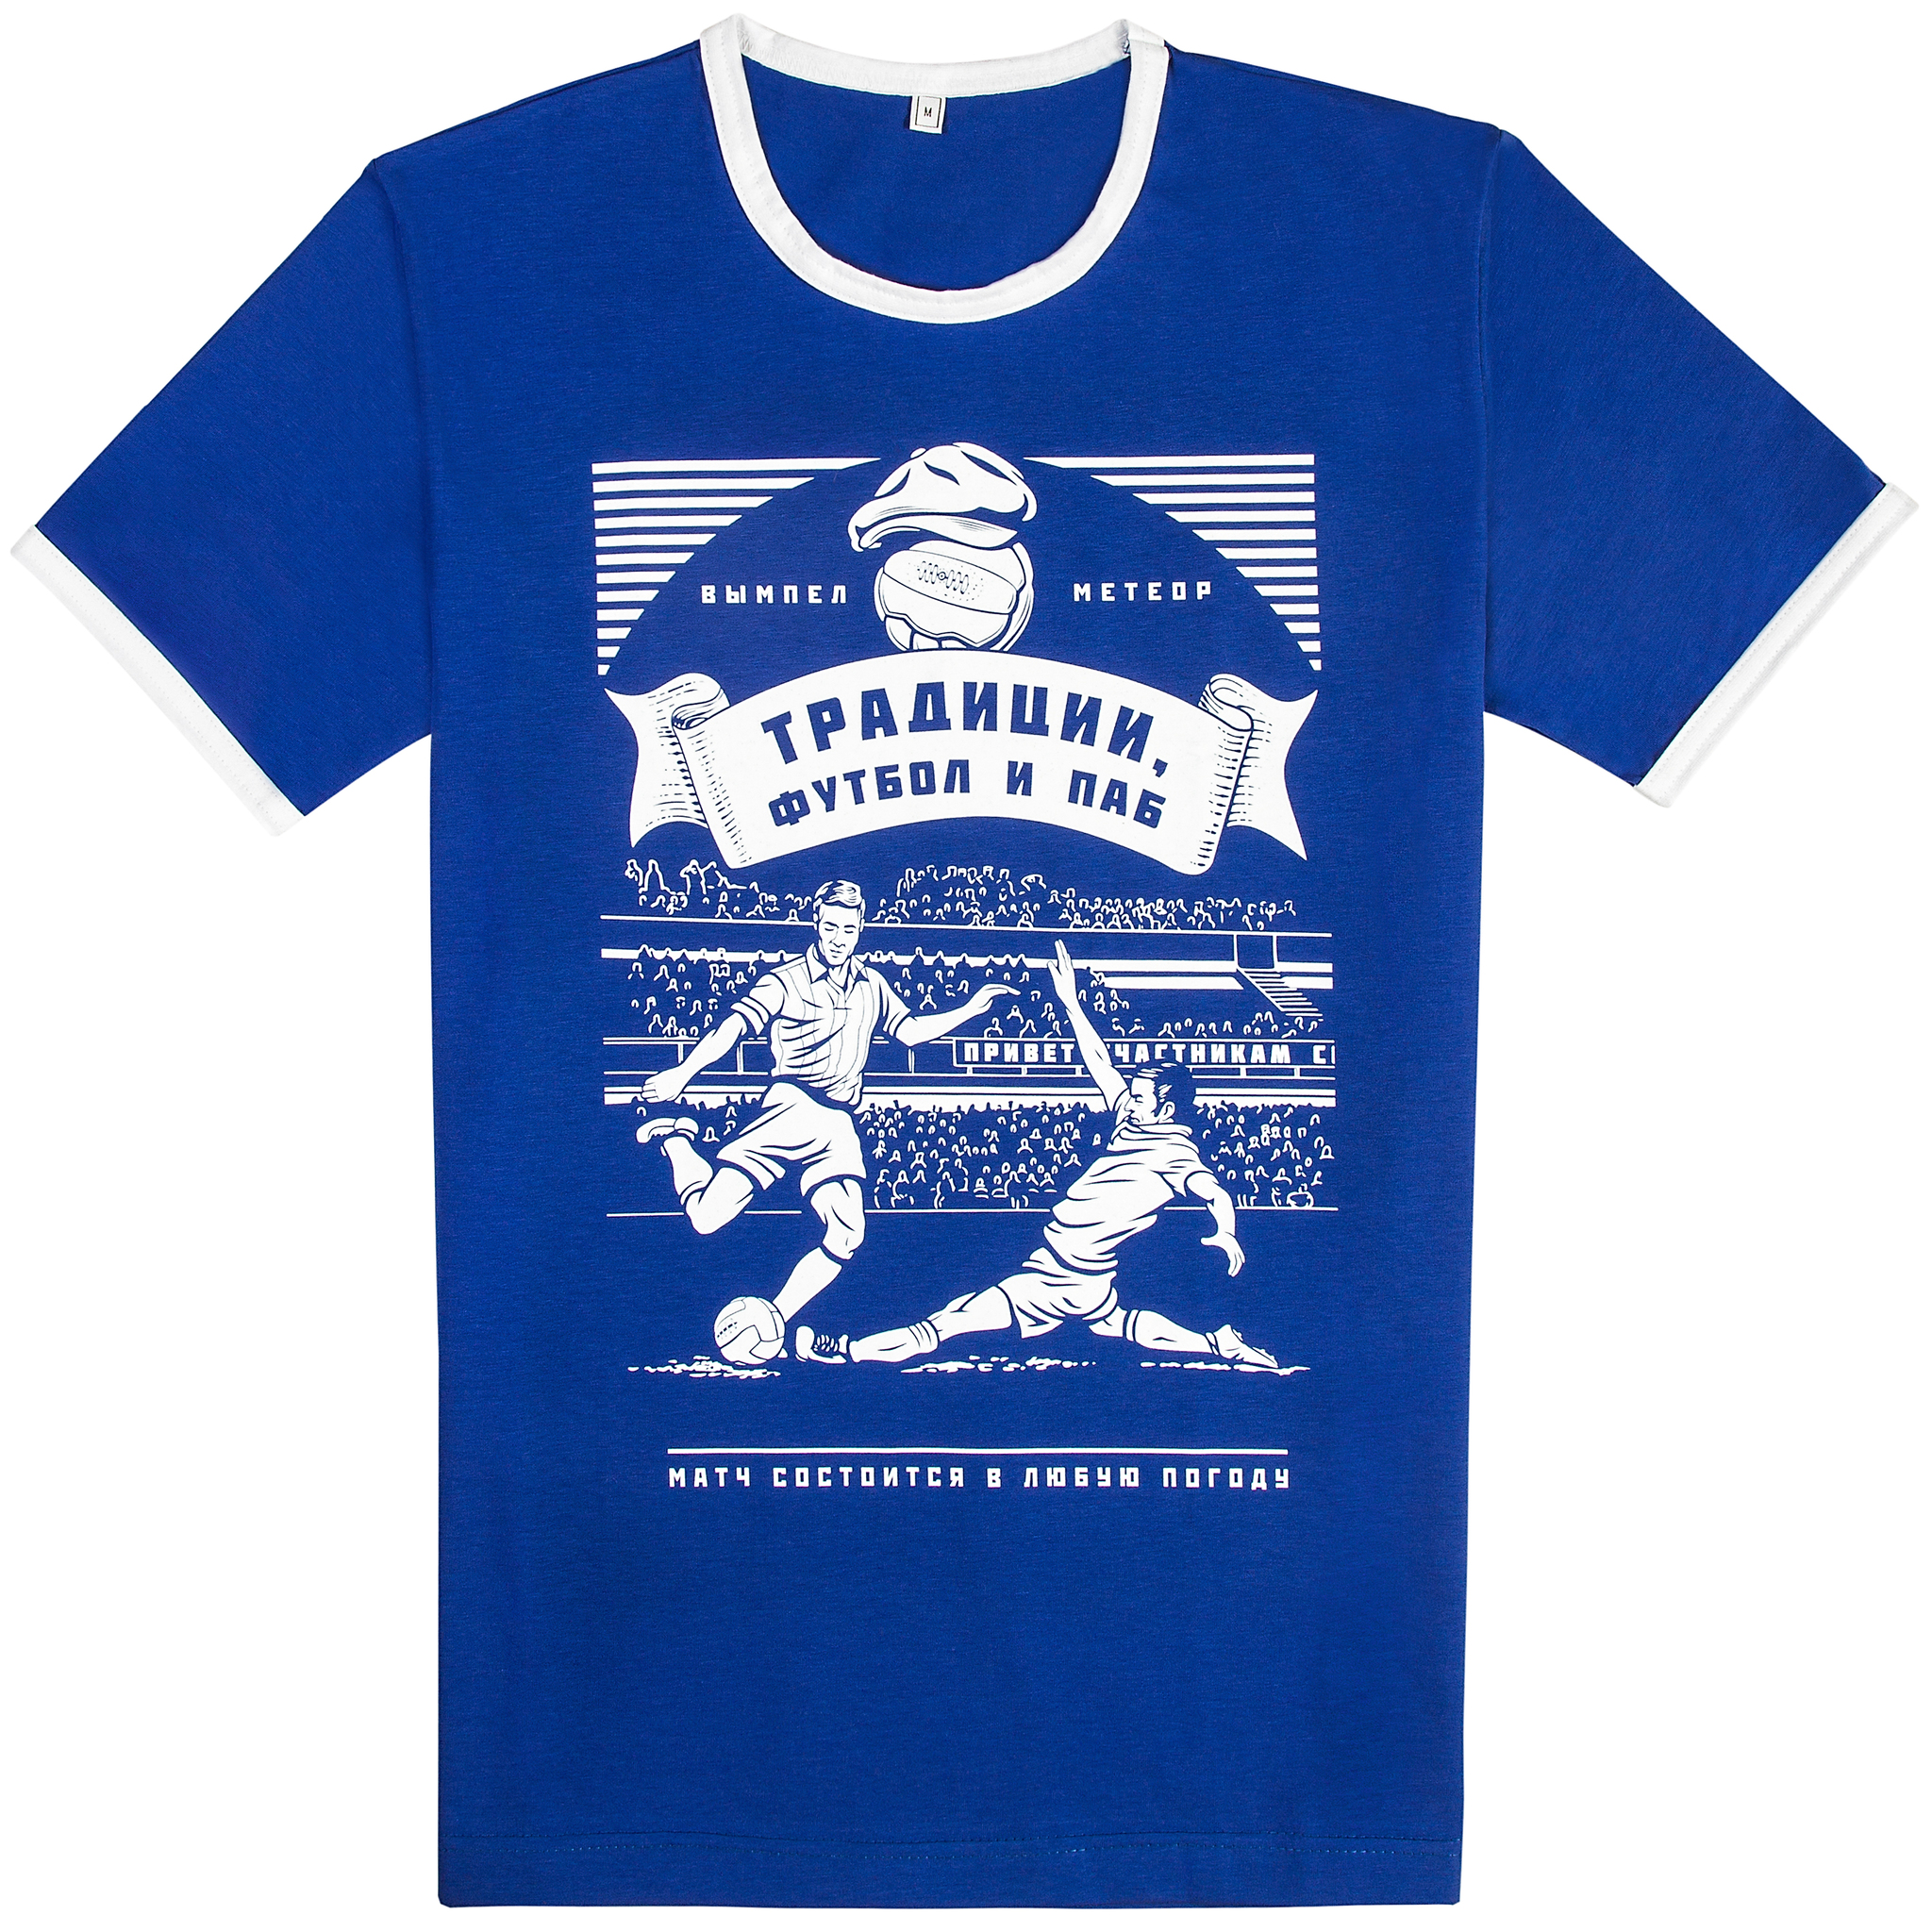 Traditions, football and pub blue t-shirt